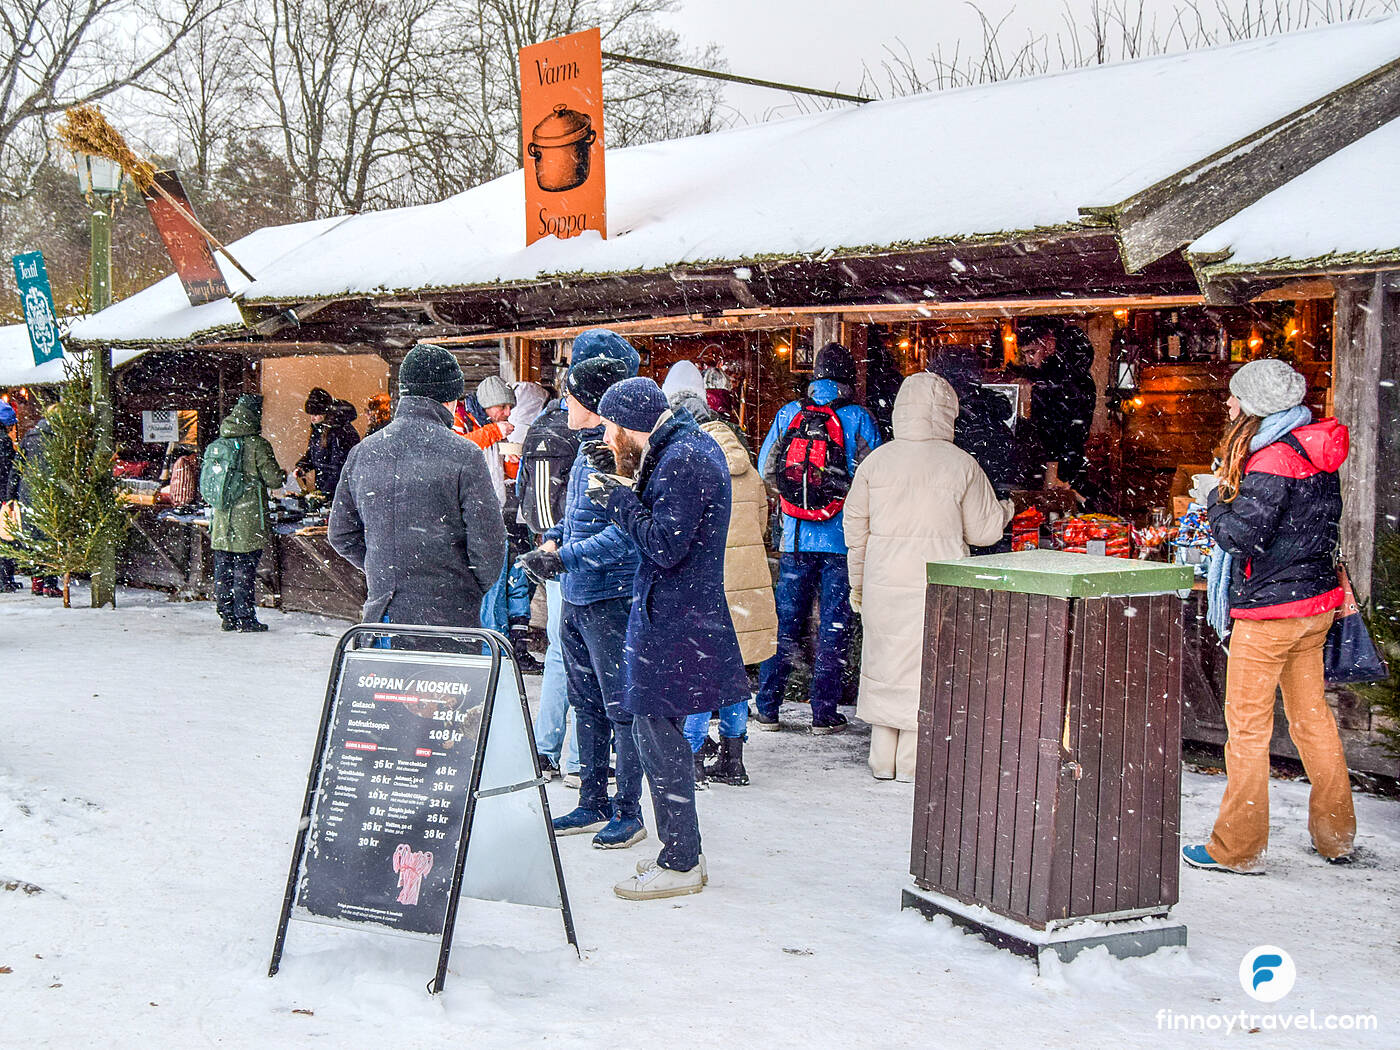 Hot soup market stall at Skansen